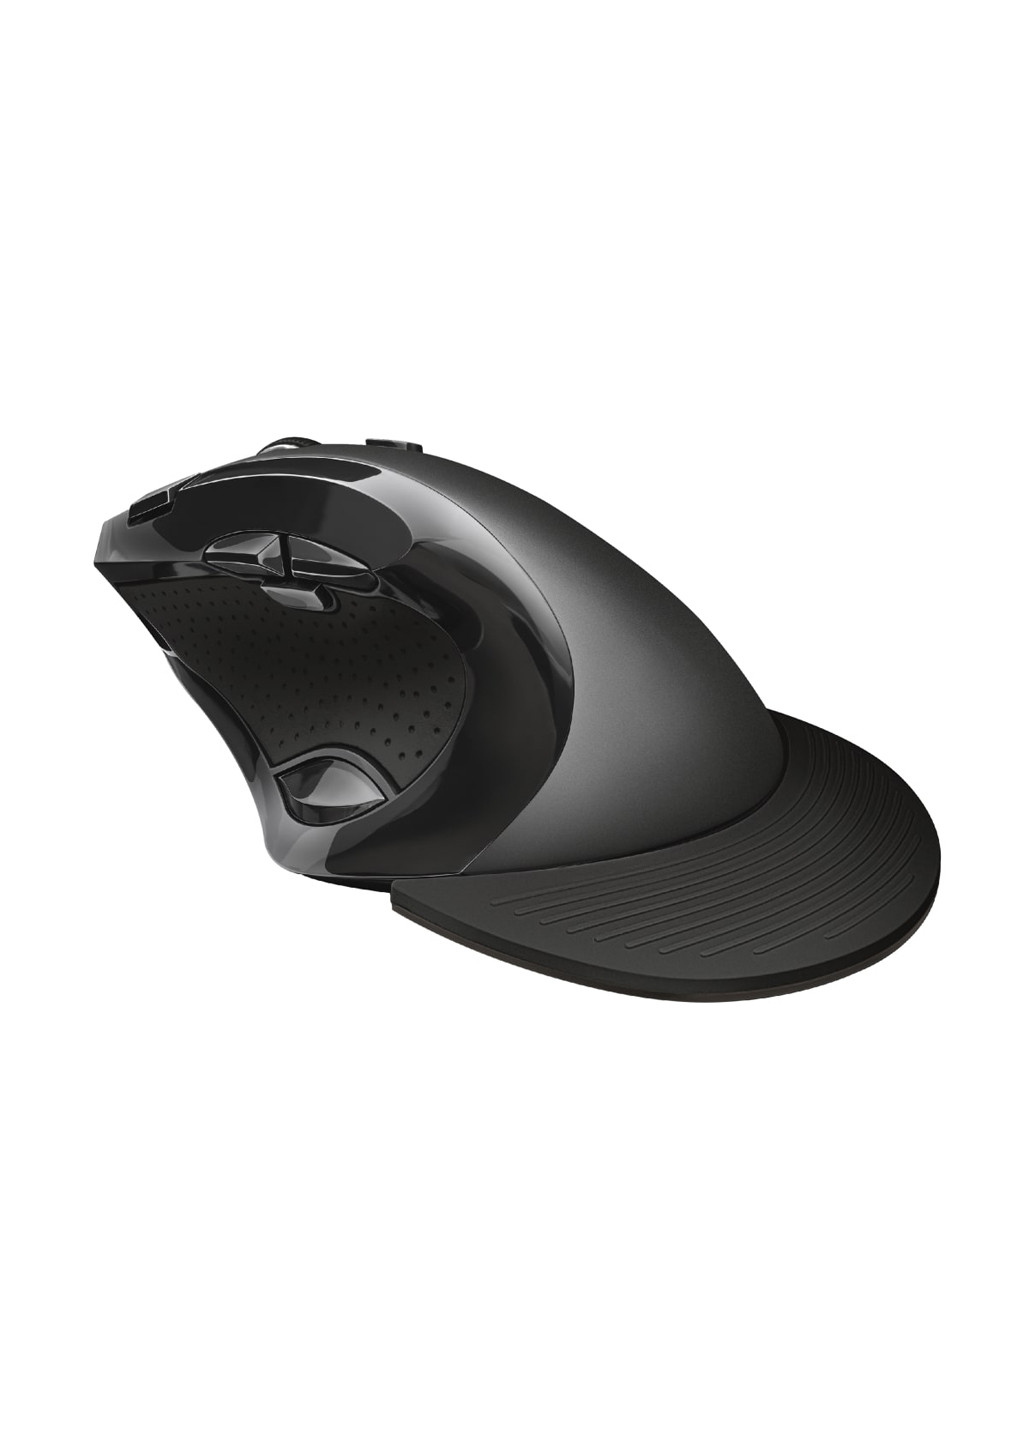 Мышь Trust vergo wl ergonomic black (21722) (158854195)